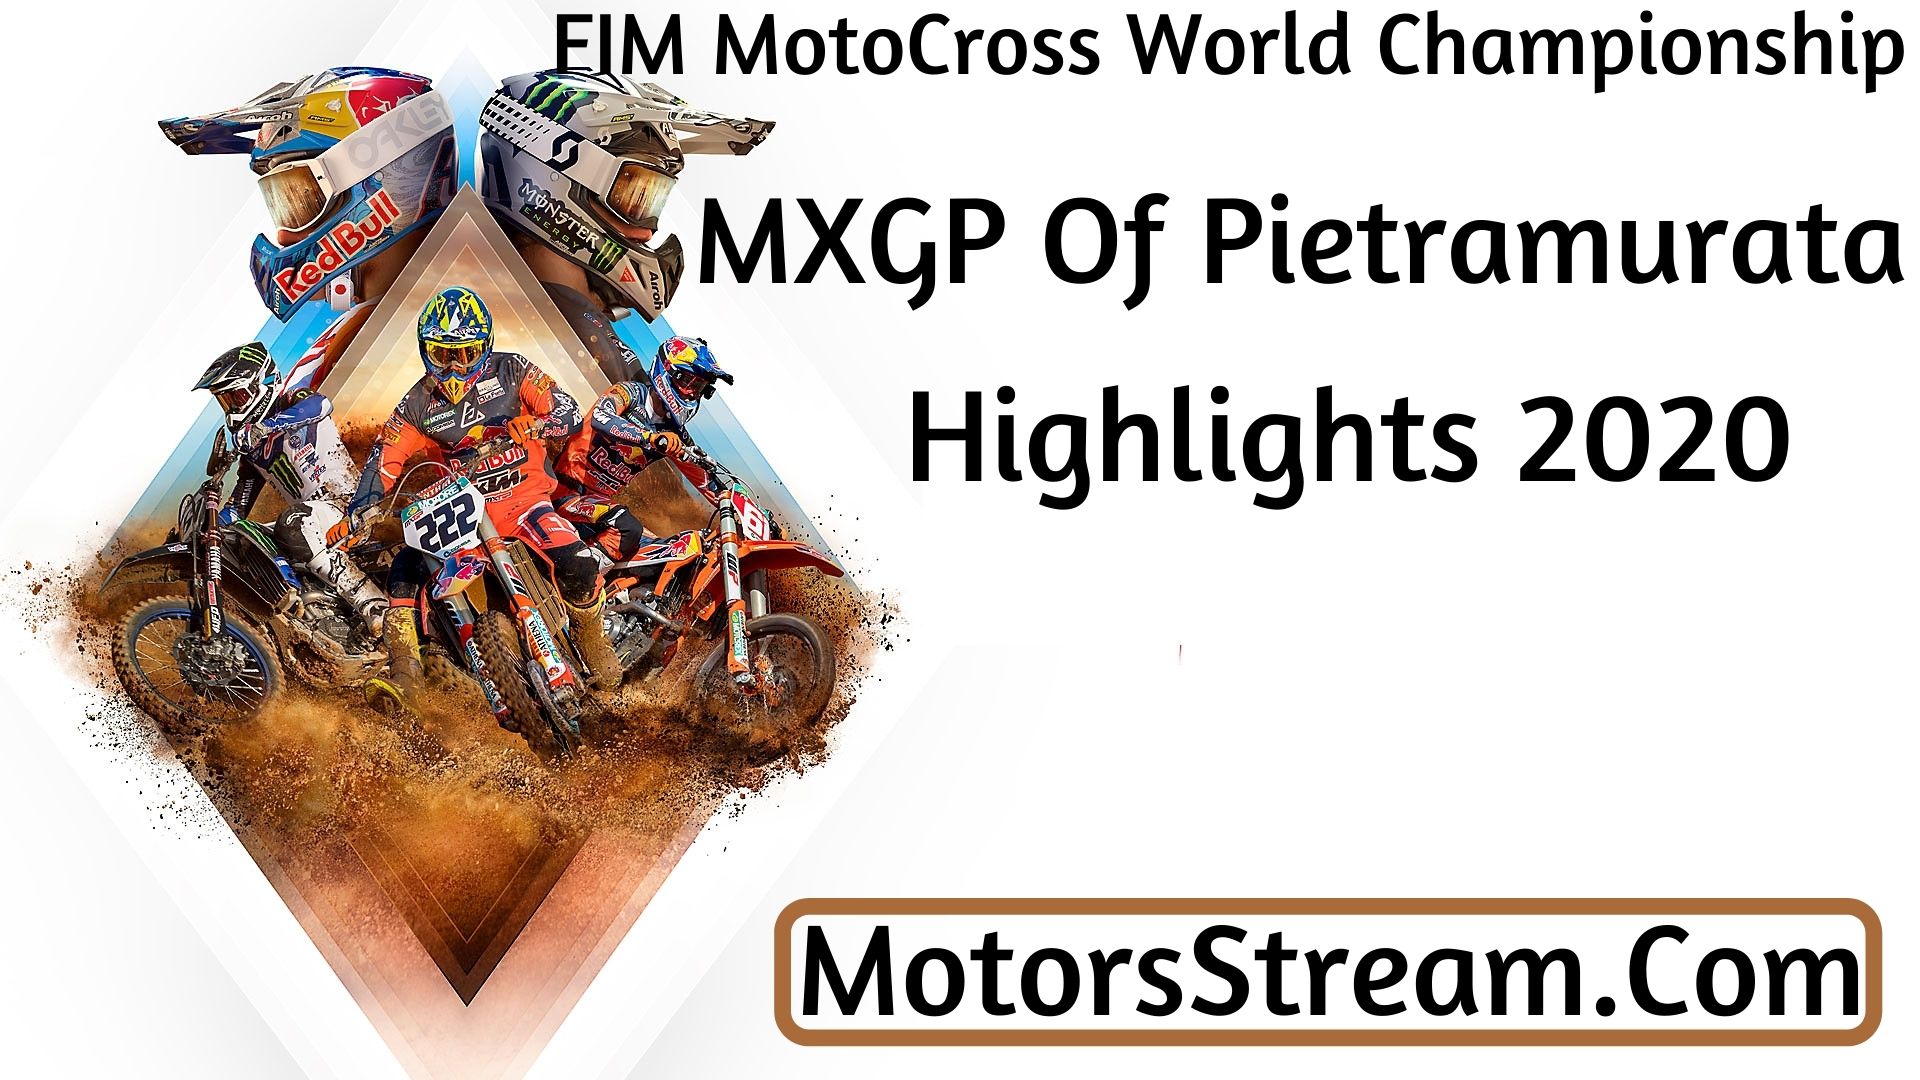 MXGP Of Pietramurata Highlights 2020